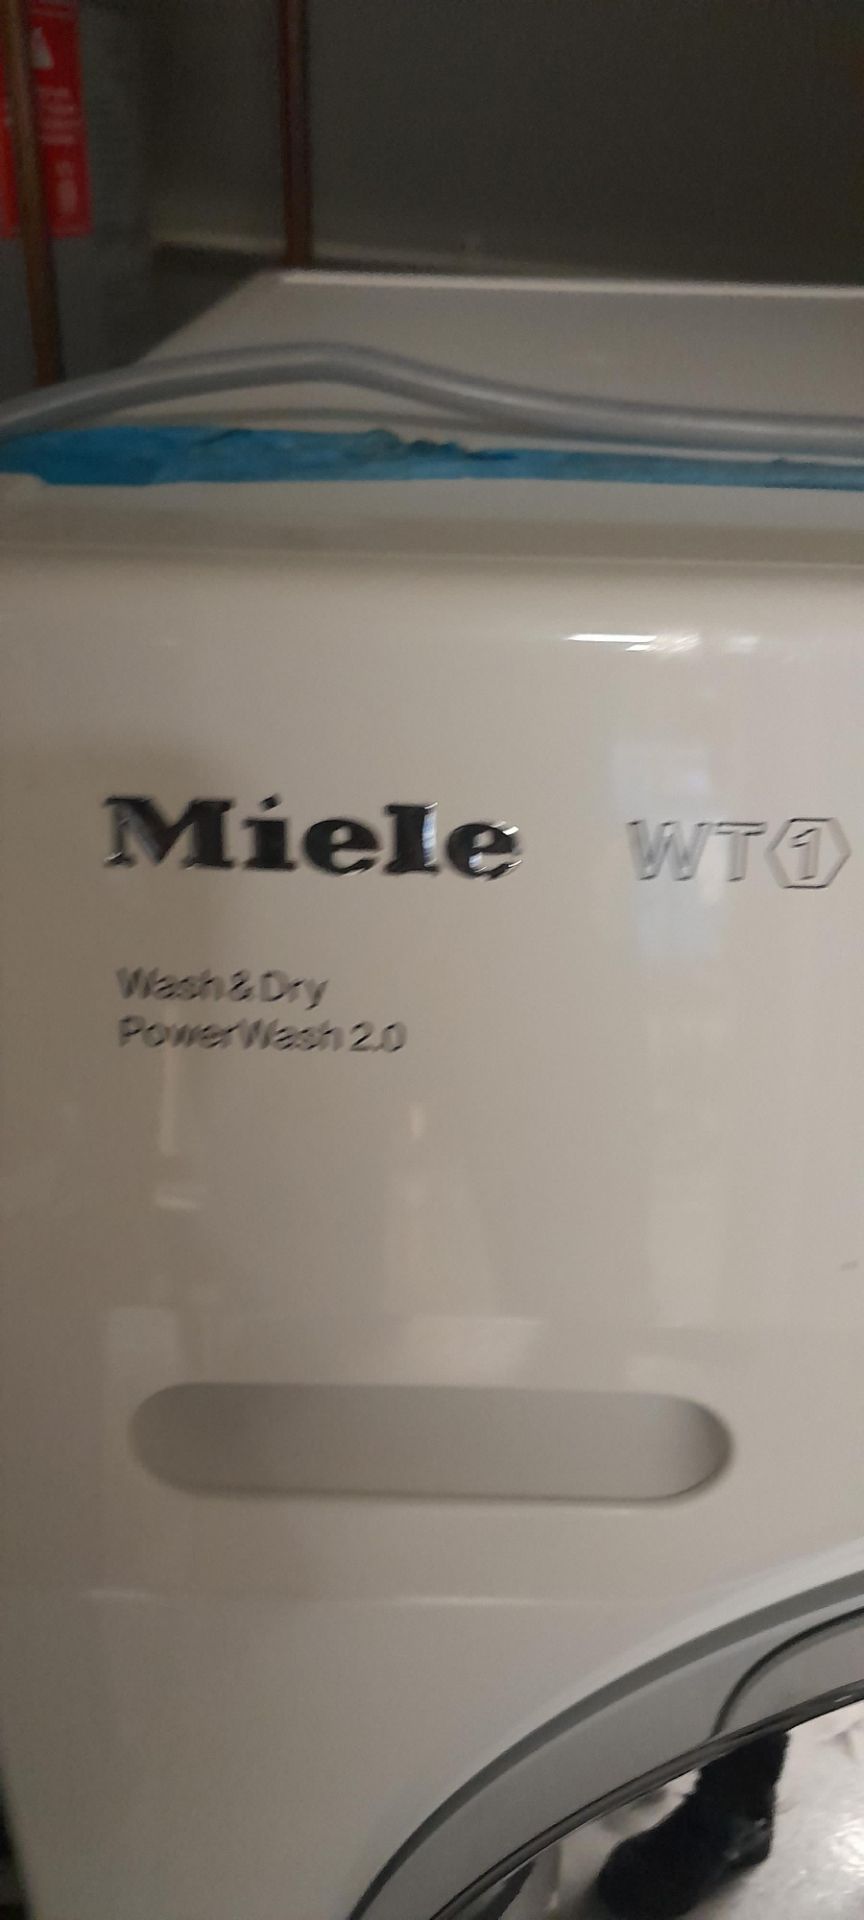 Miele WT1 Power Wash 2.0 Wash & Dry - Image 2 of 2